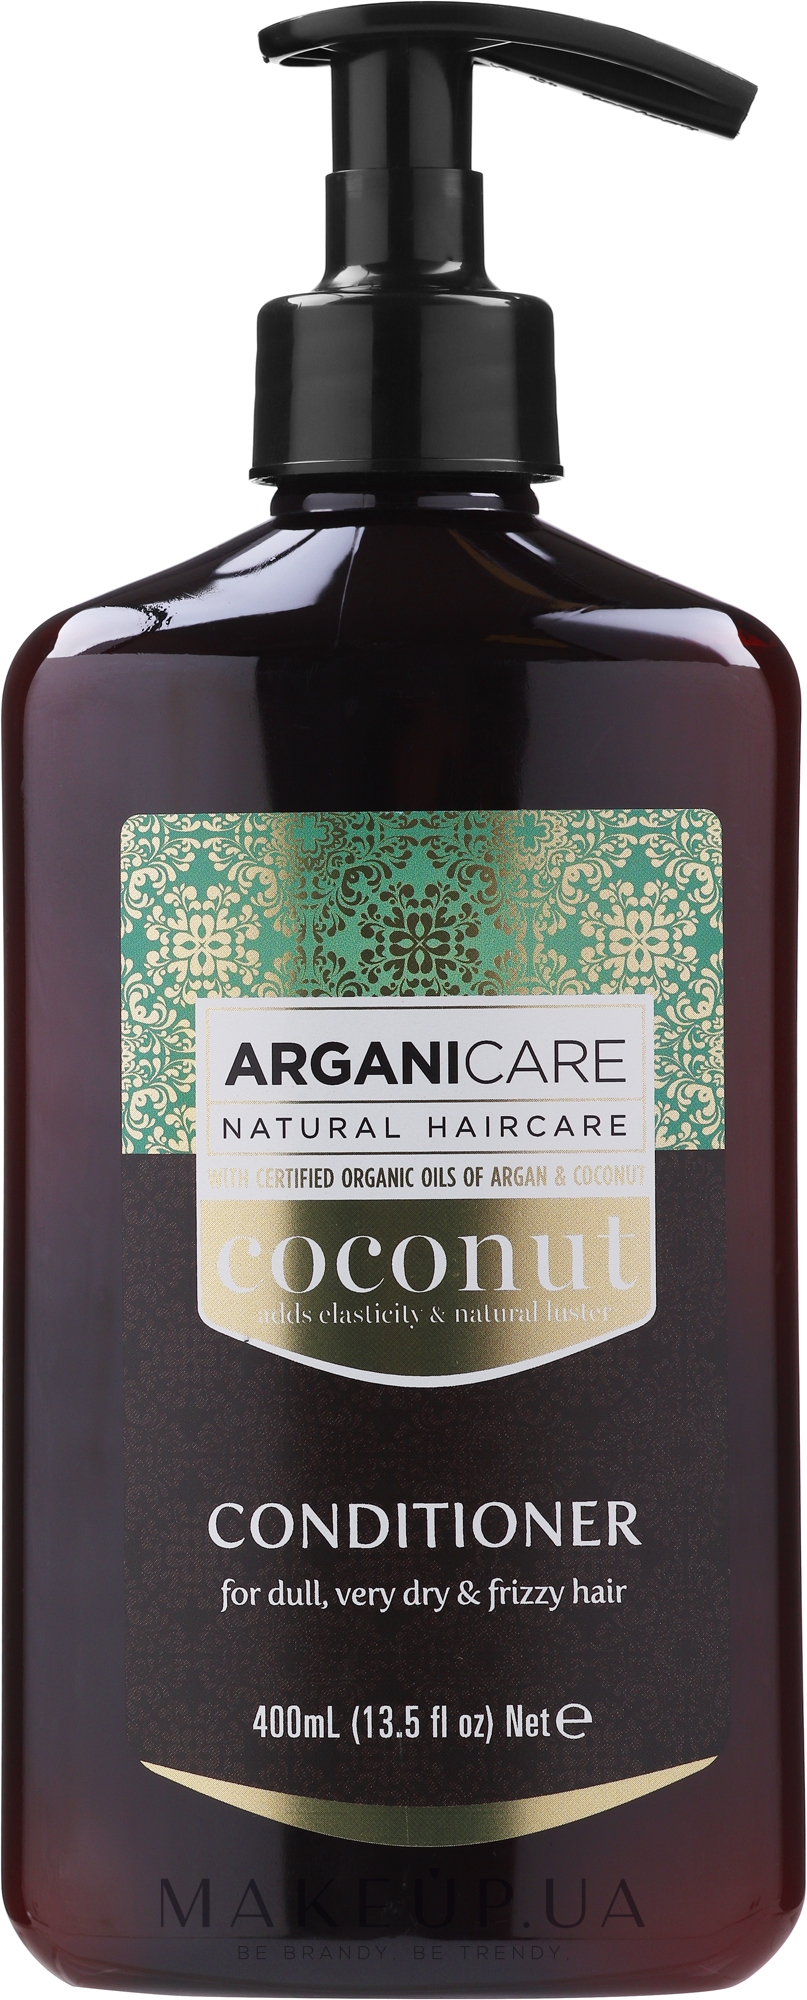 Кокосовий кондиціонер для волосся - Arganicare Coconut Conditioner For Dull, Very Dry & Frizzy Hair — фото 400ml